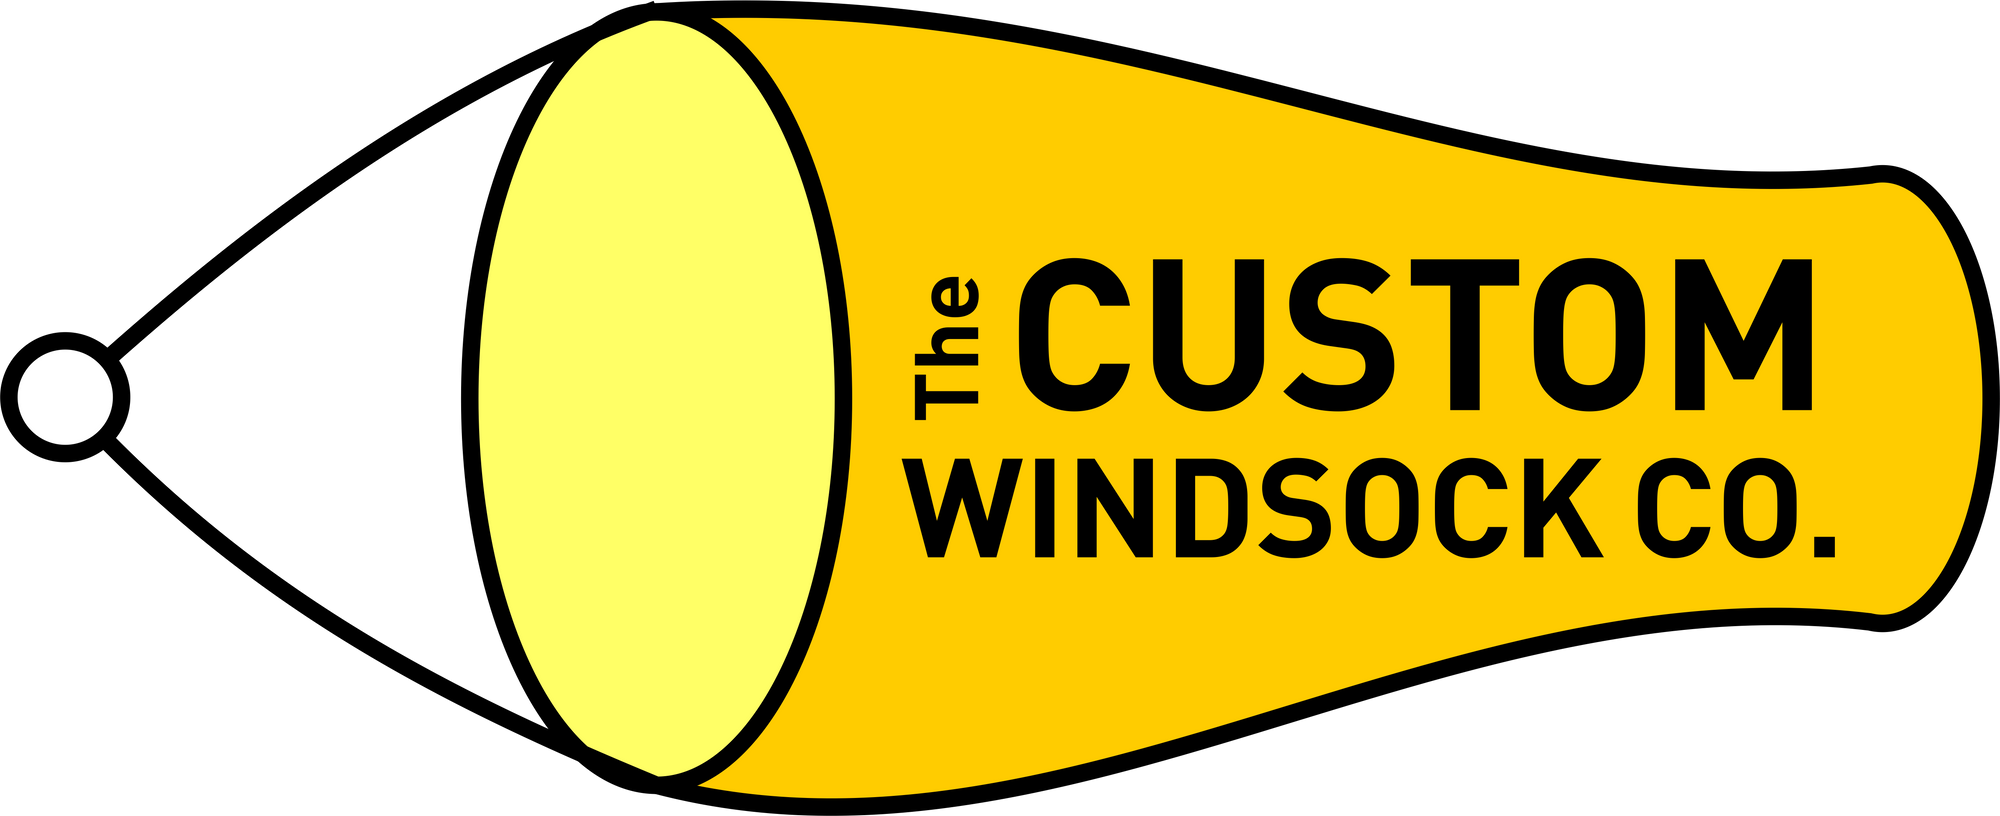 The Custom Windsock Company logo